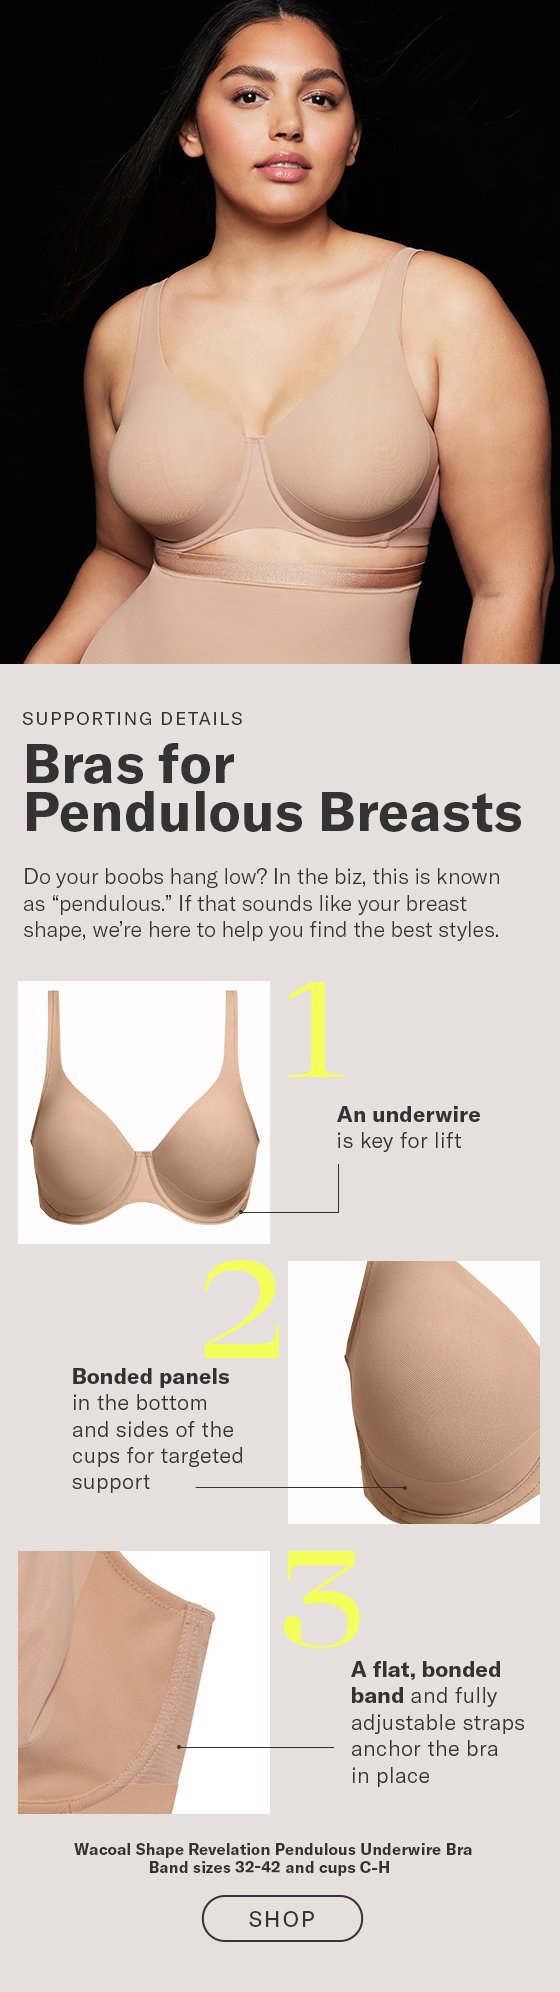 Wacoal Shape Revelation For Pendulous Breasts Underwire